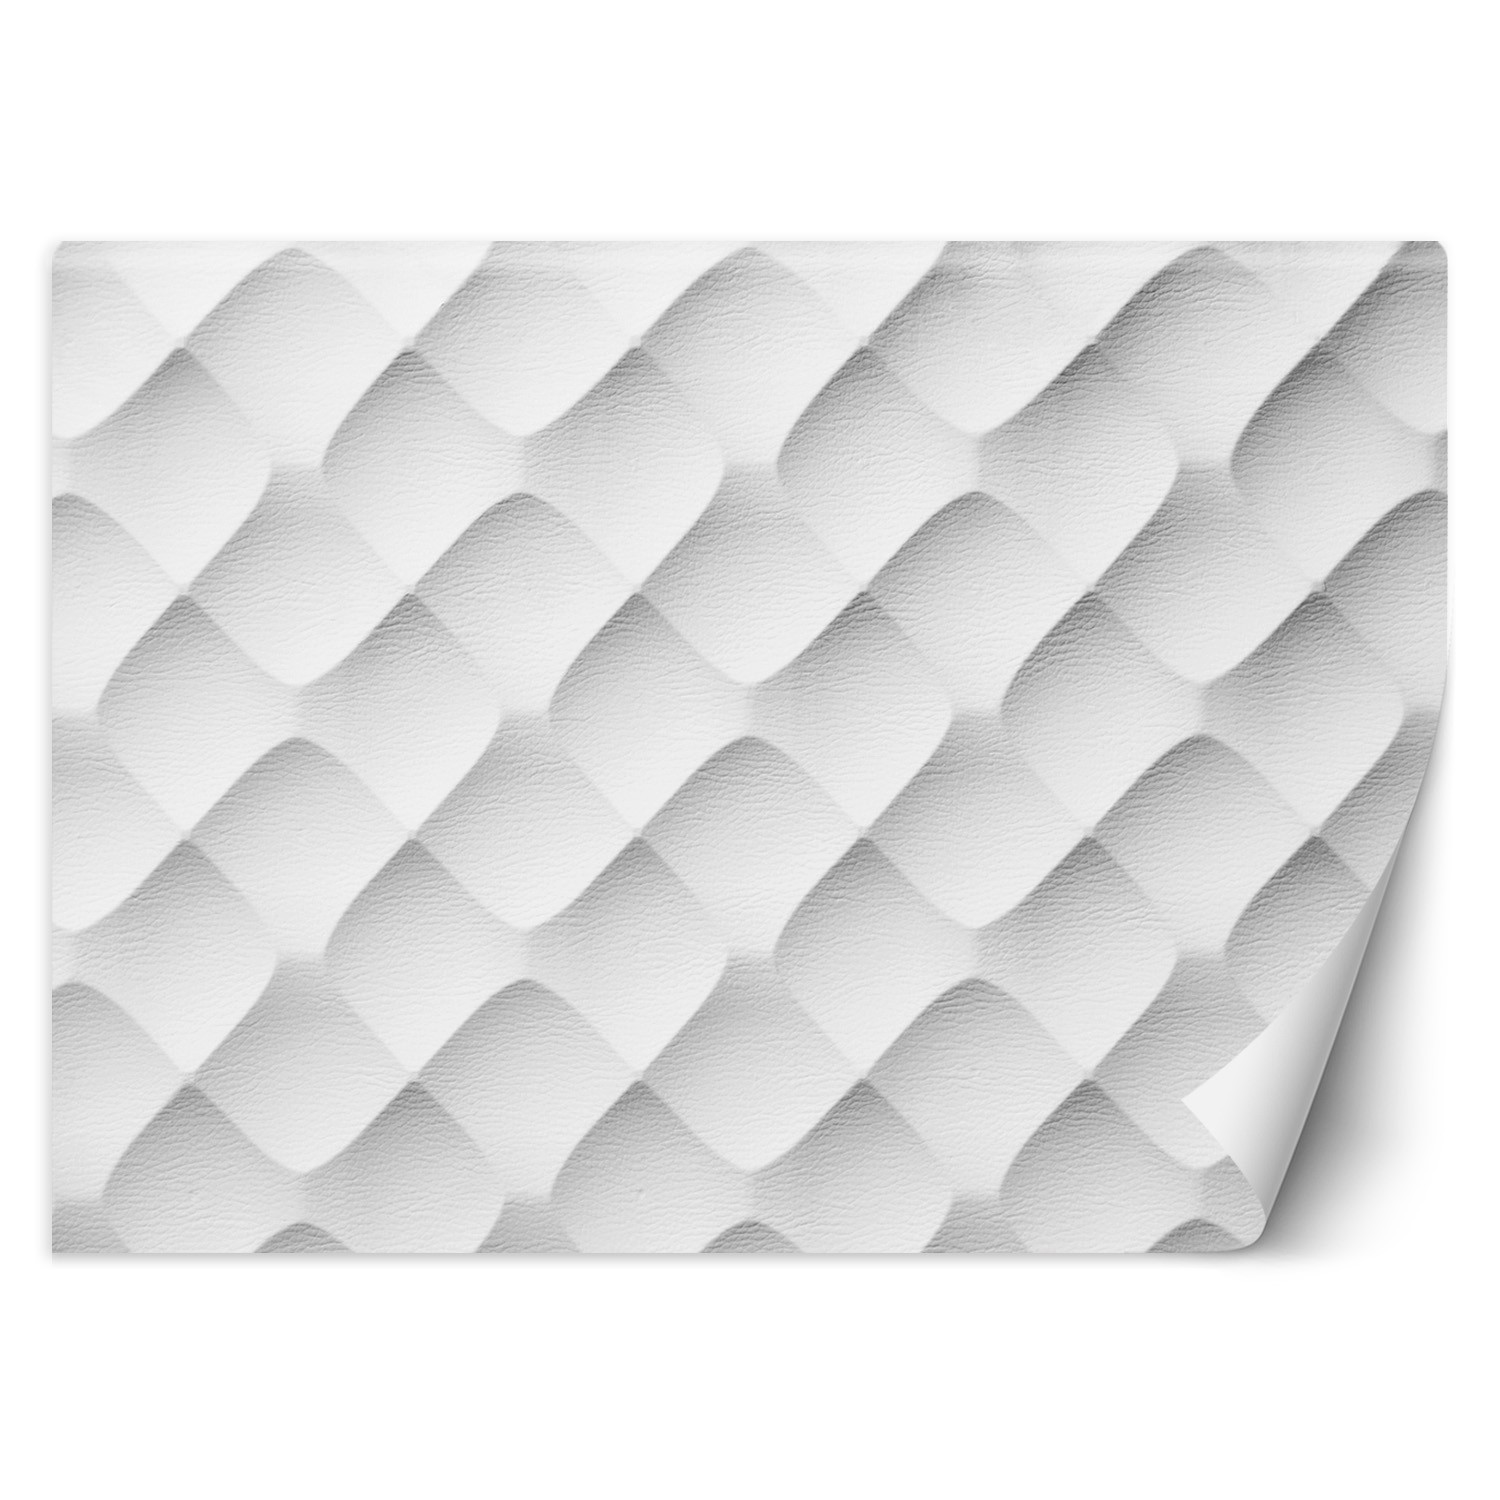 Trend24 – Behang – Abstract Patroon – Vliesbehang – Fotobehang 3D – Behang Woonkamer – 400x280x2 cm – Incl. behanglijm